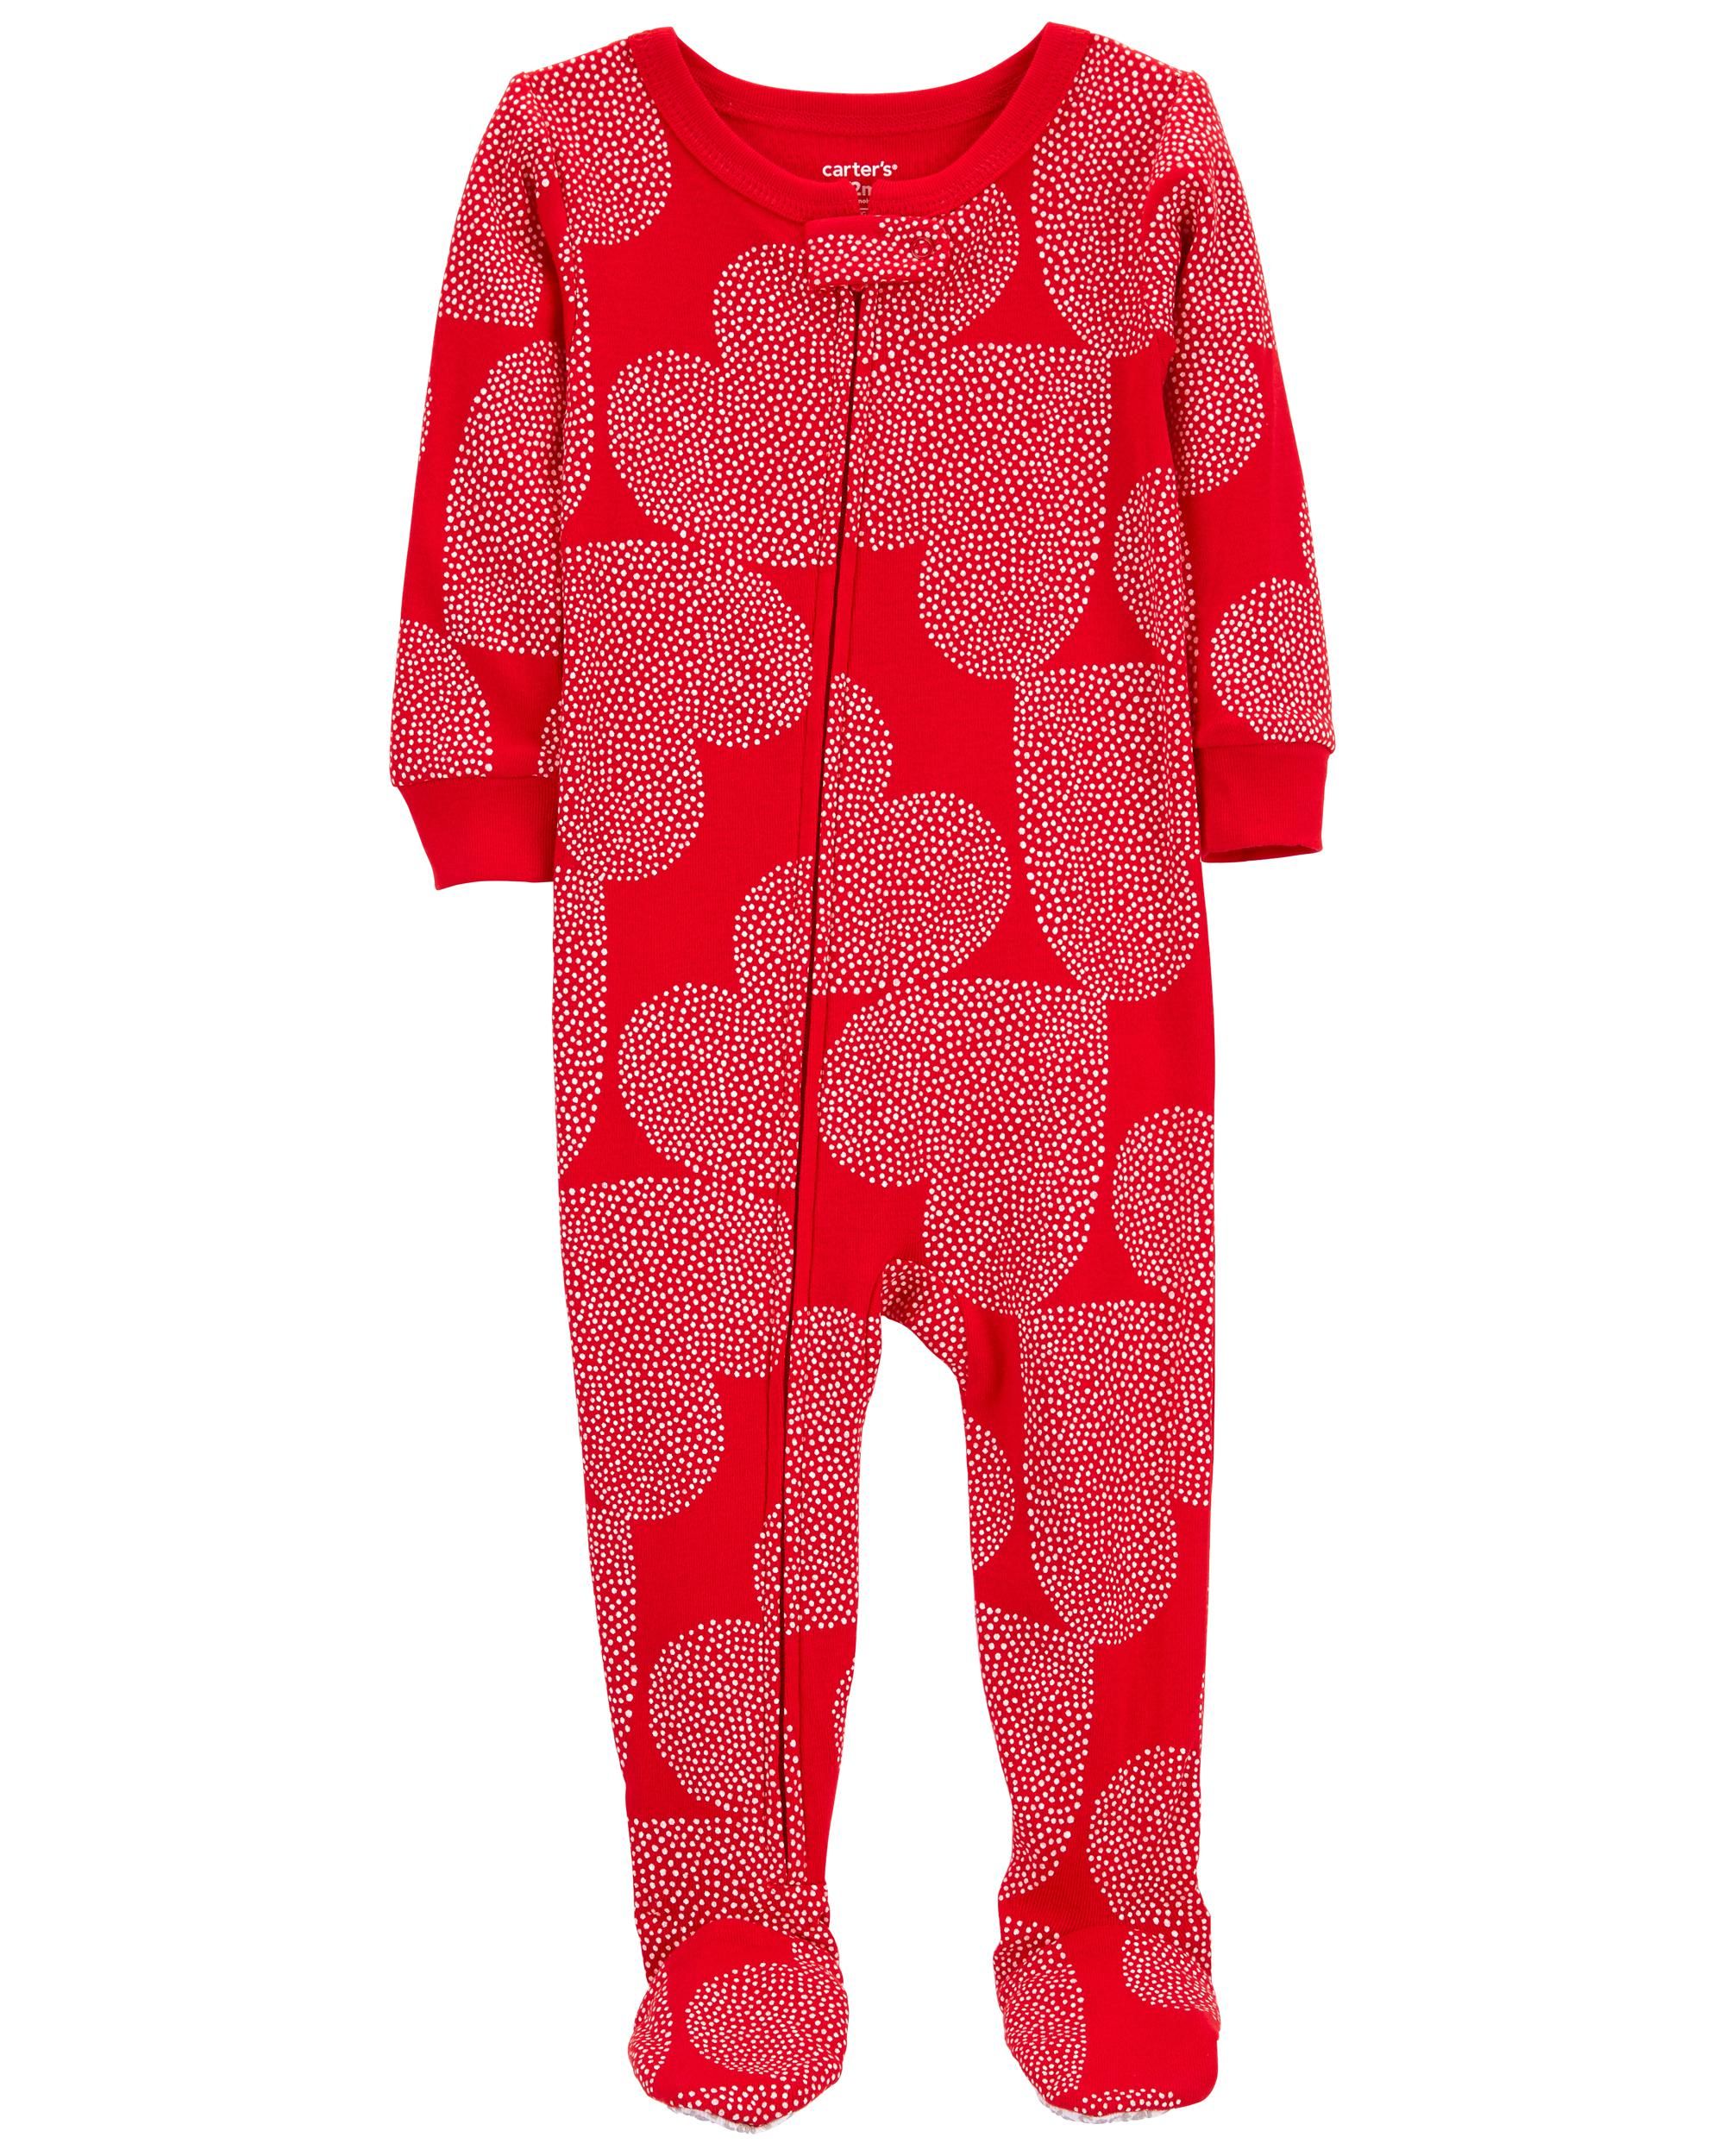 Toddler 1-Piece Hearts 100% Snug Fit Cotton Footie PJs | carters.com | Carter's